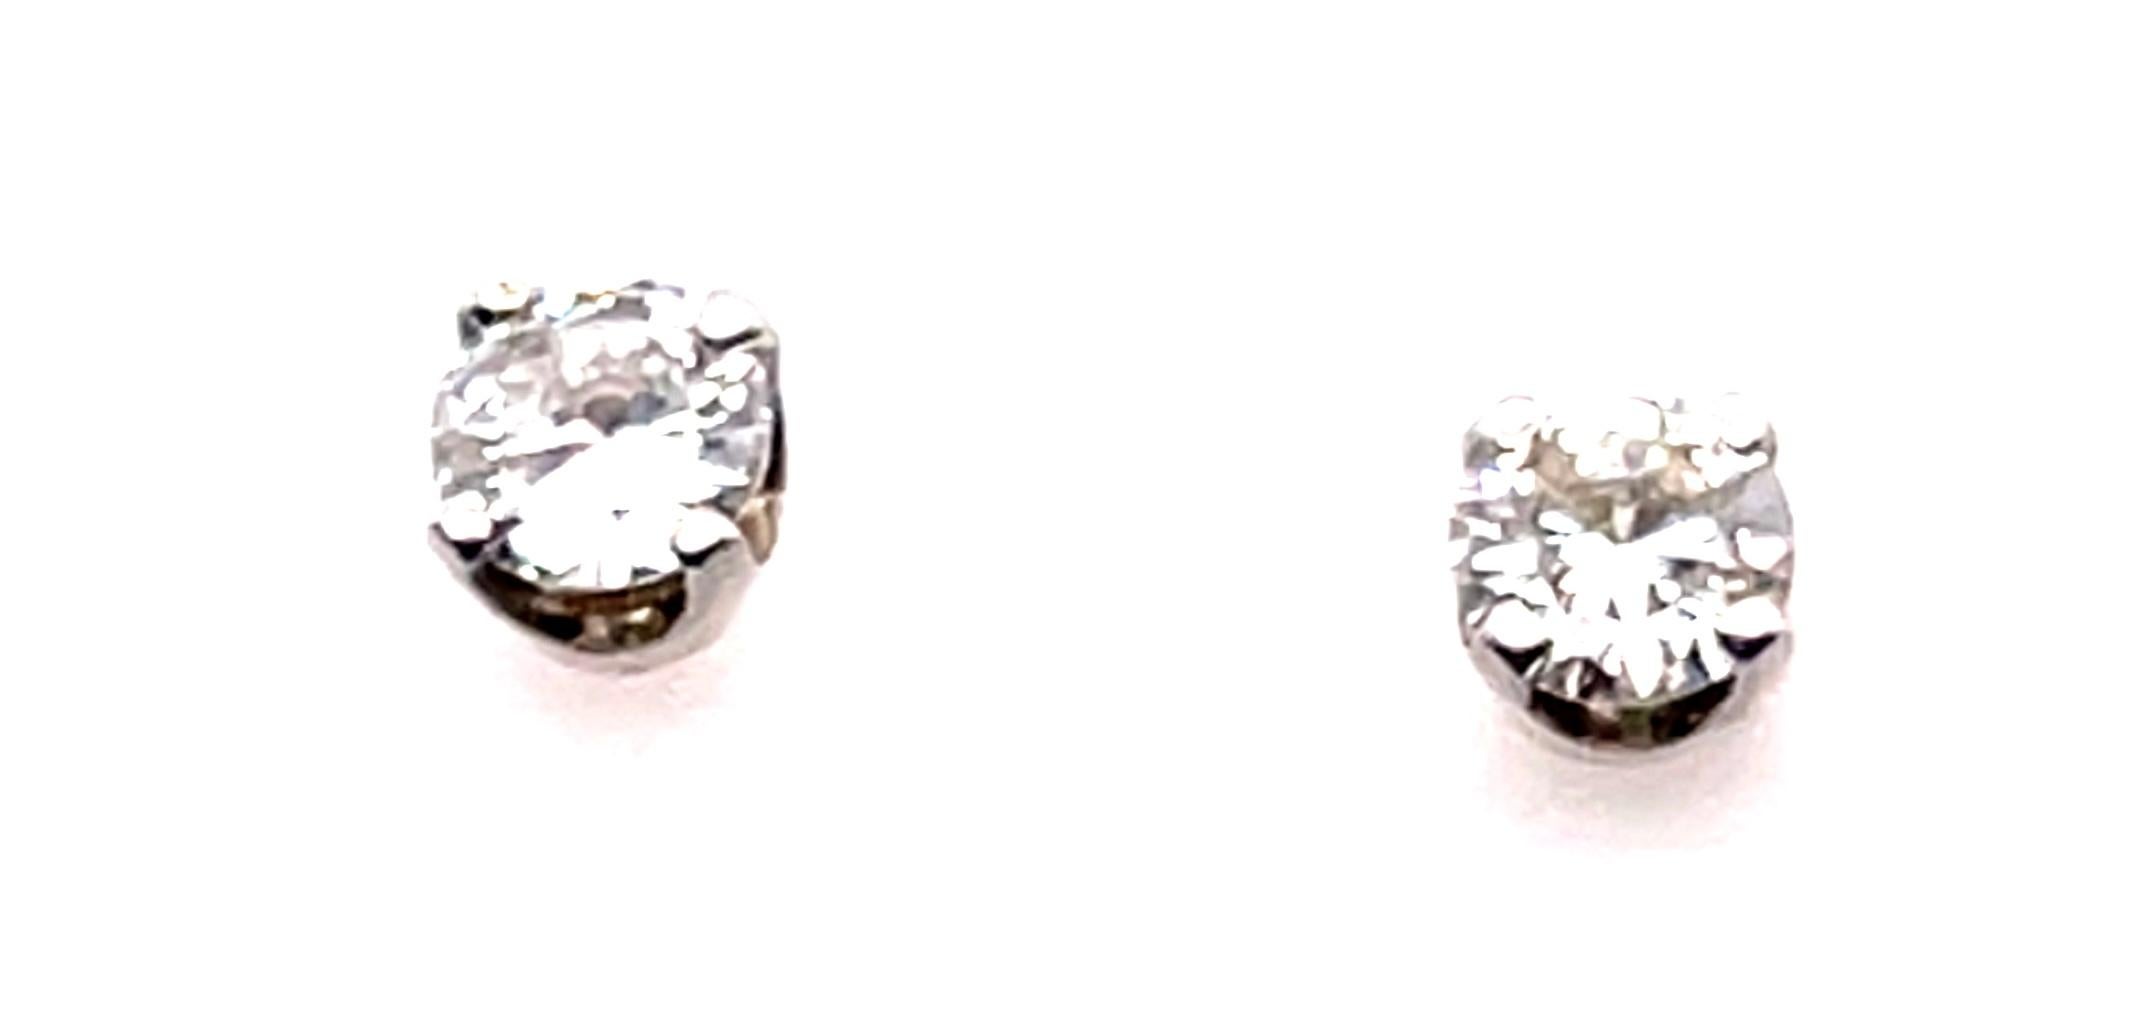 14 Karat White Gold Stud Diamond Earrings.
0.50 total diamond weight
0.76 grams total weight.